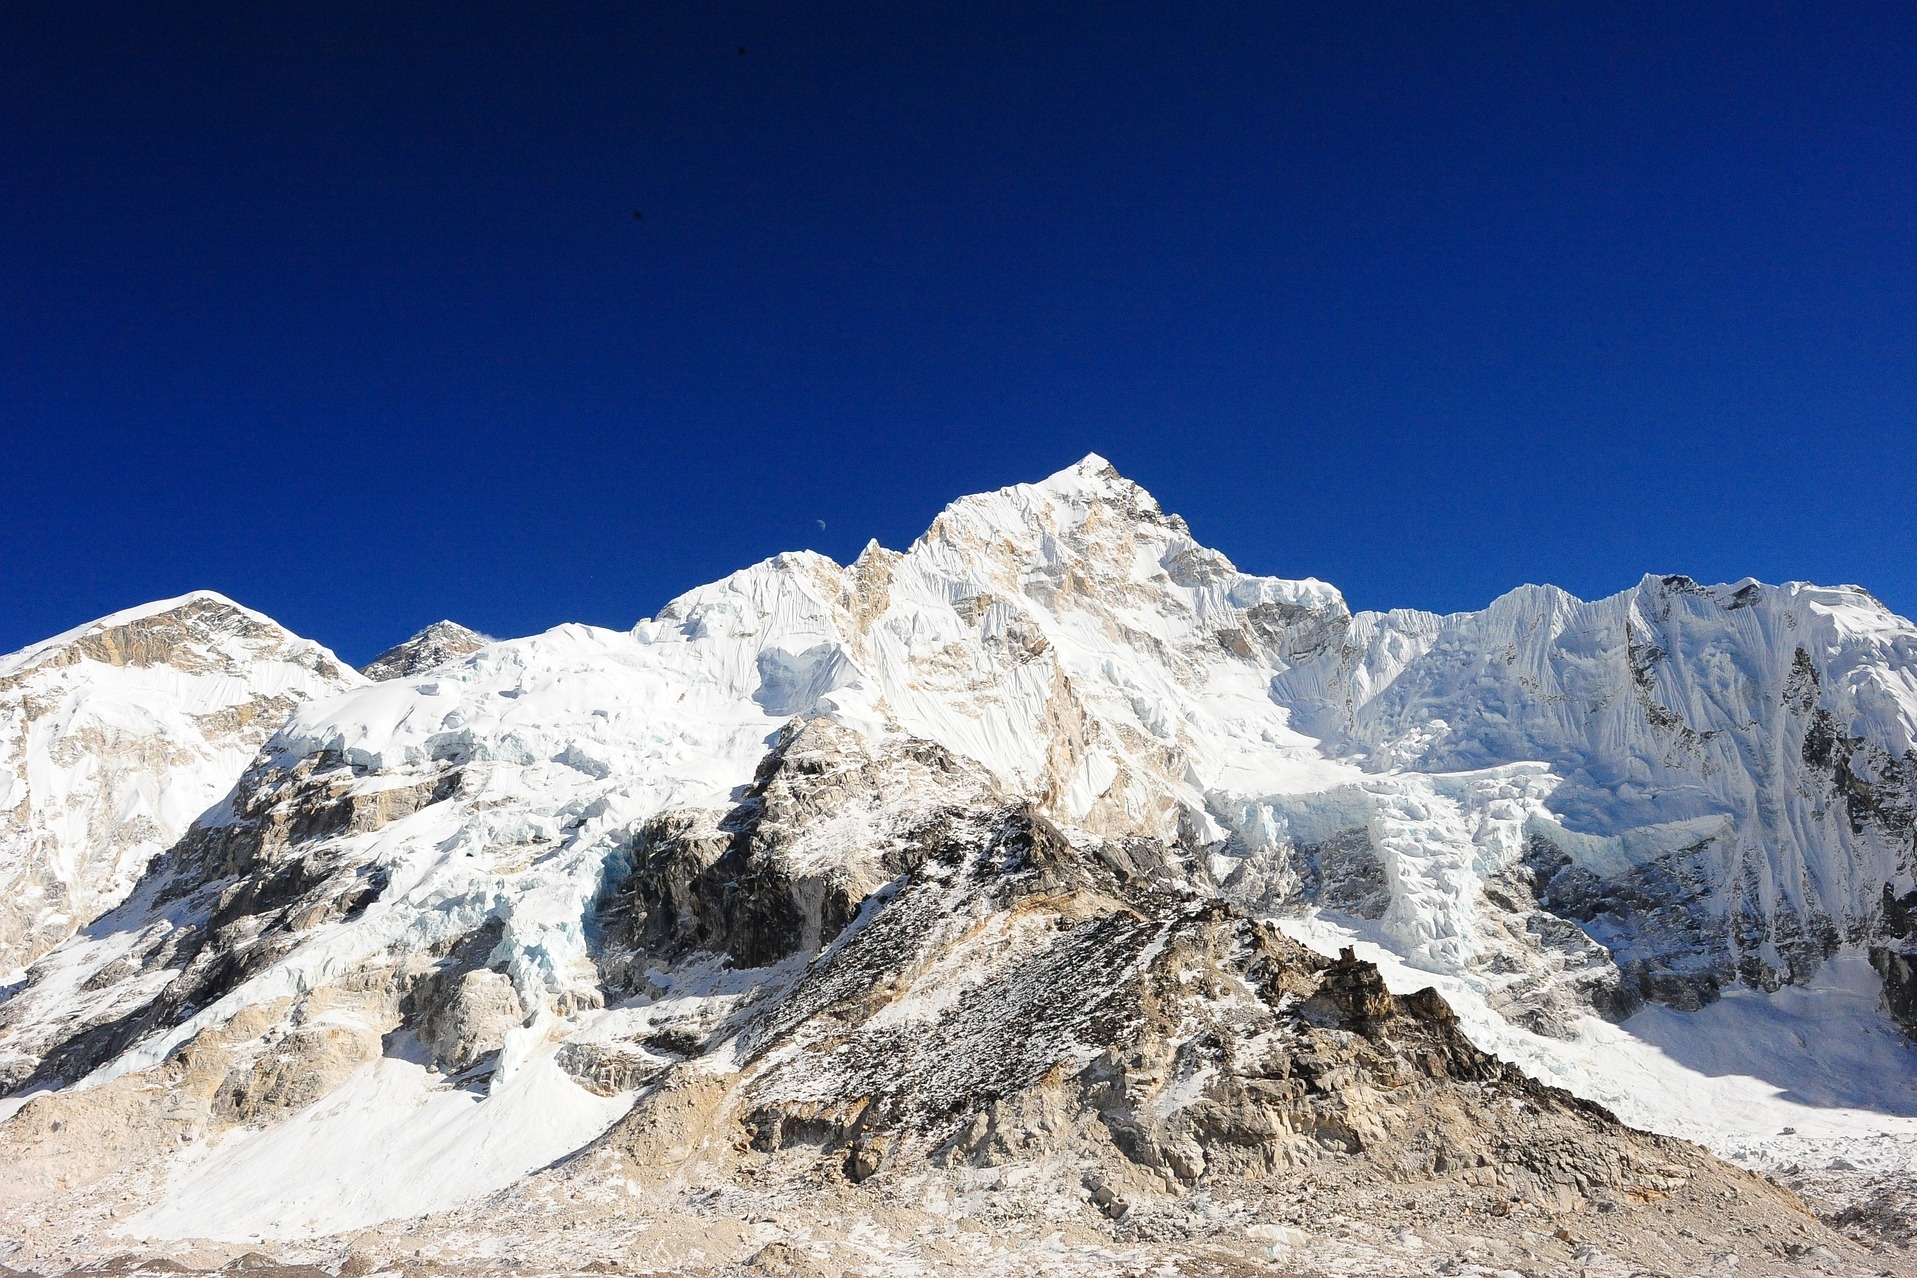 Everest Base Camp and Kala Patthar Trekking